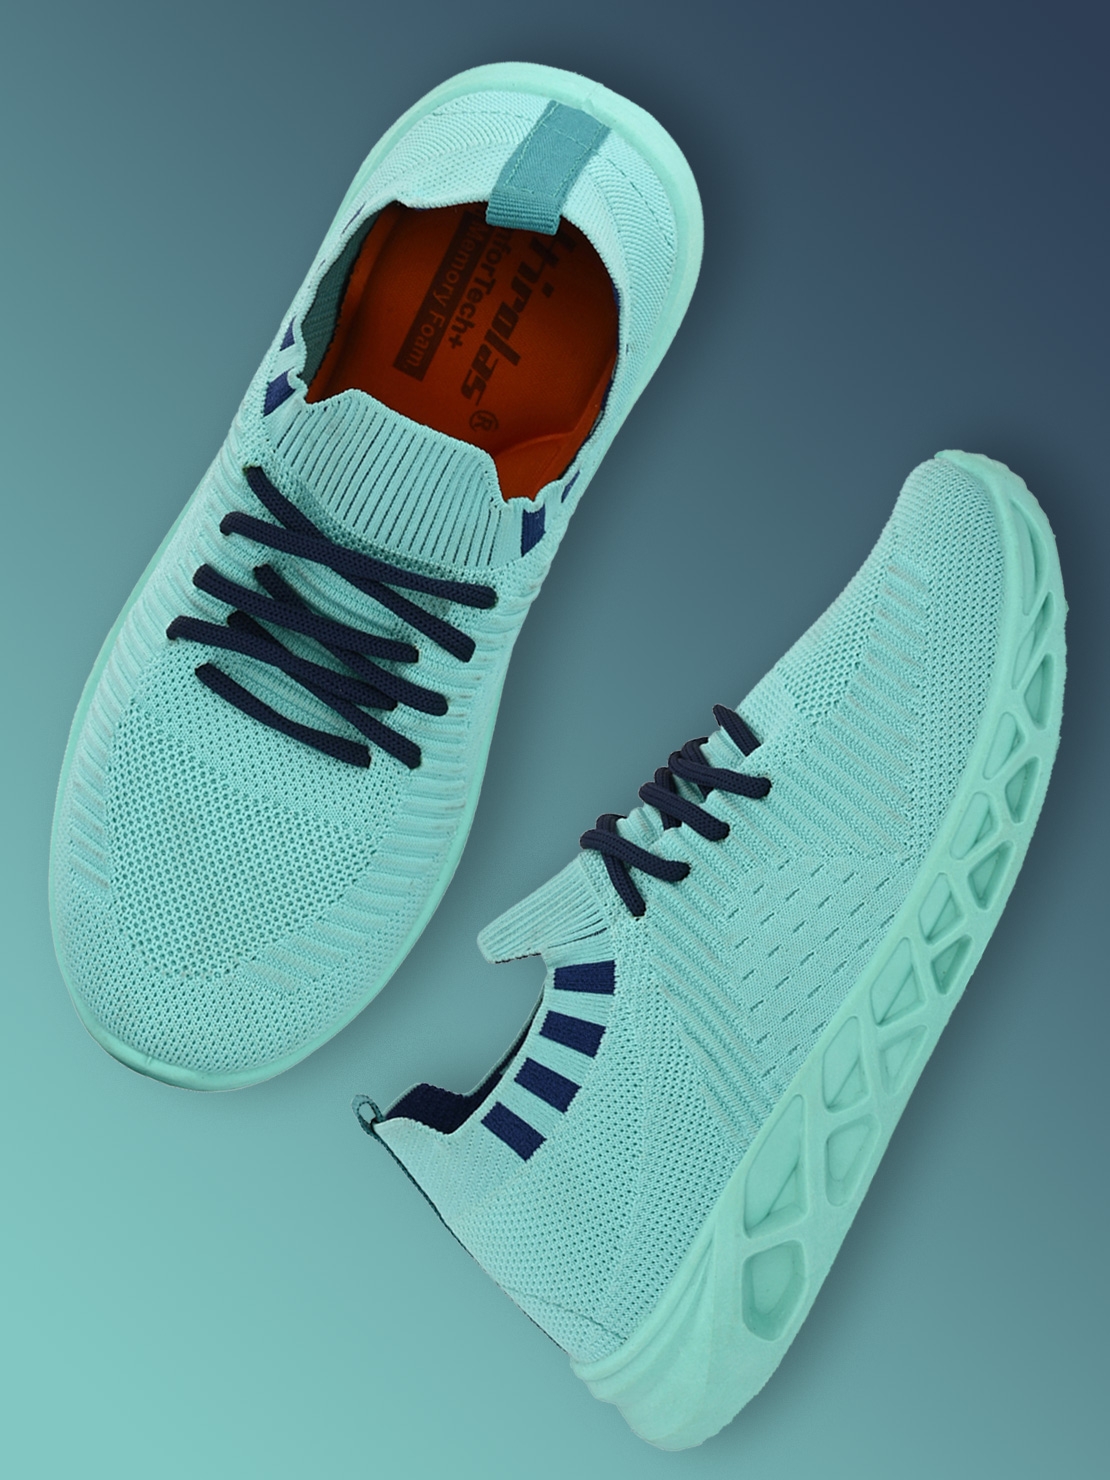 Hirolas | Hirolas® Men's Sea Green Knitted Gym/Walking/Running athleisure Sports Sneaker Shoes 